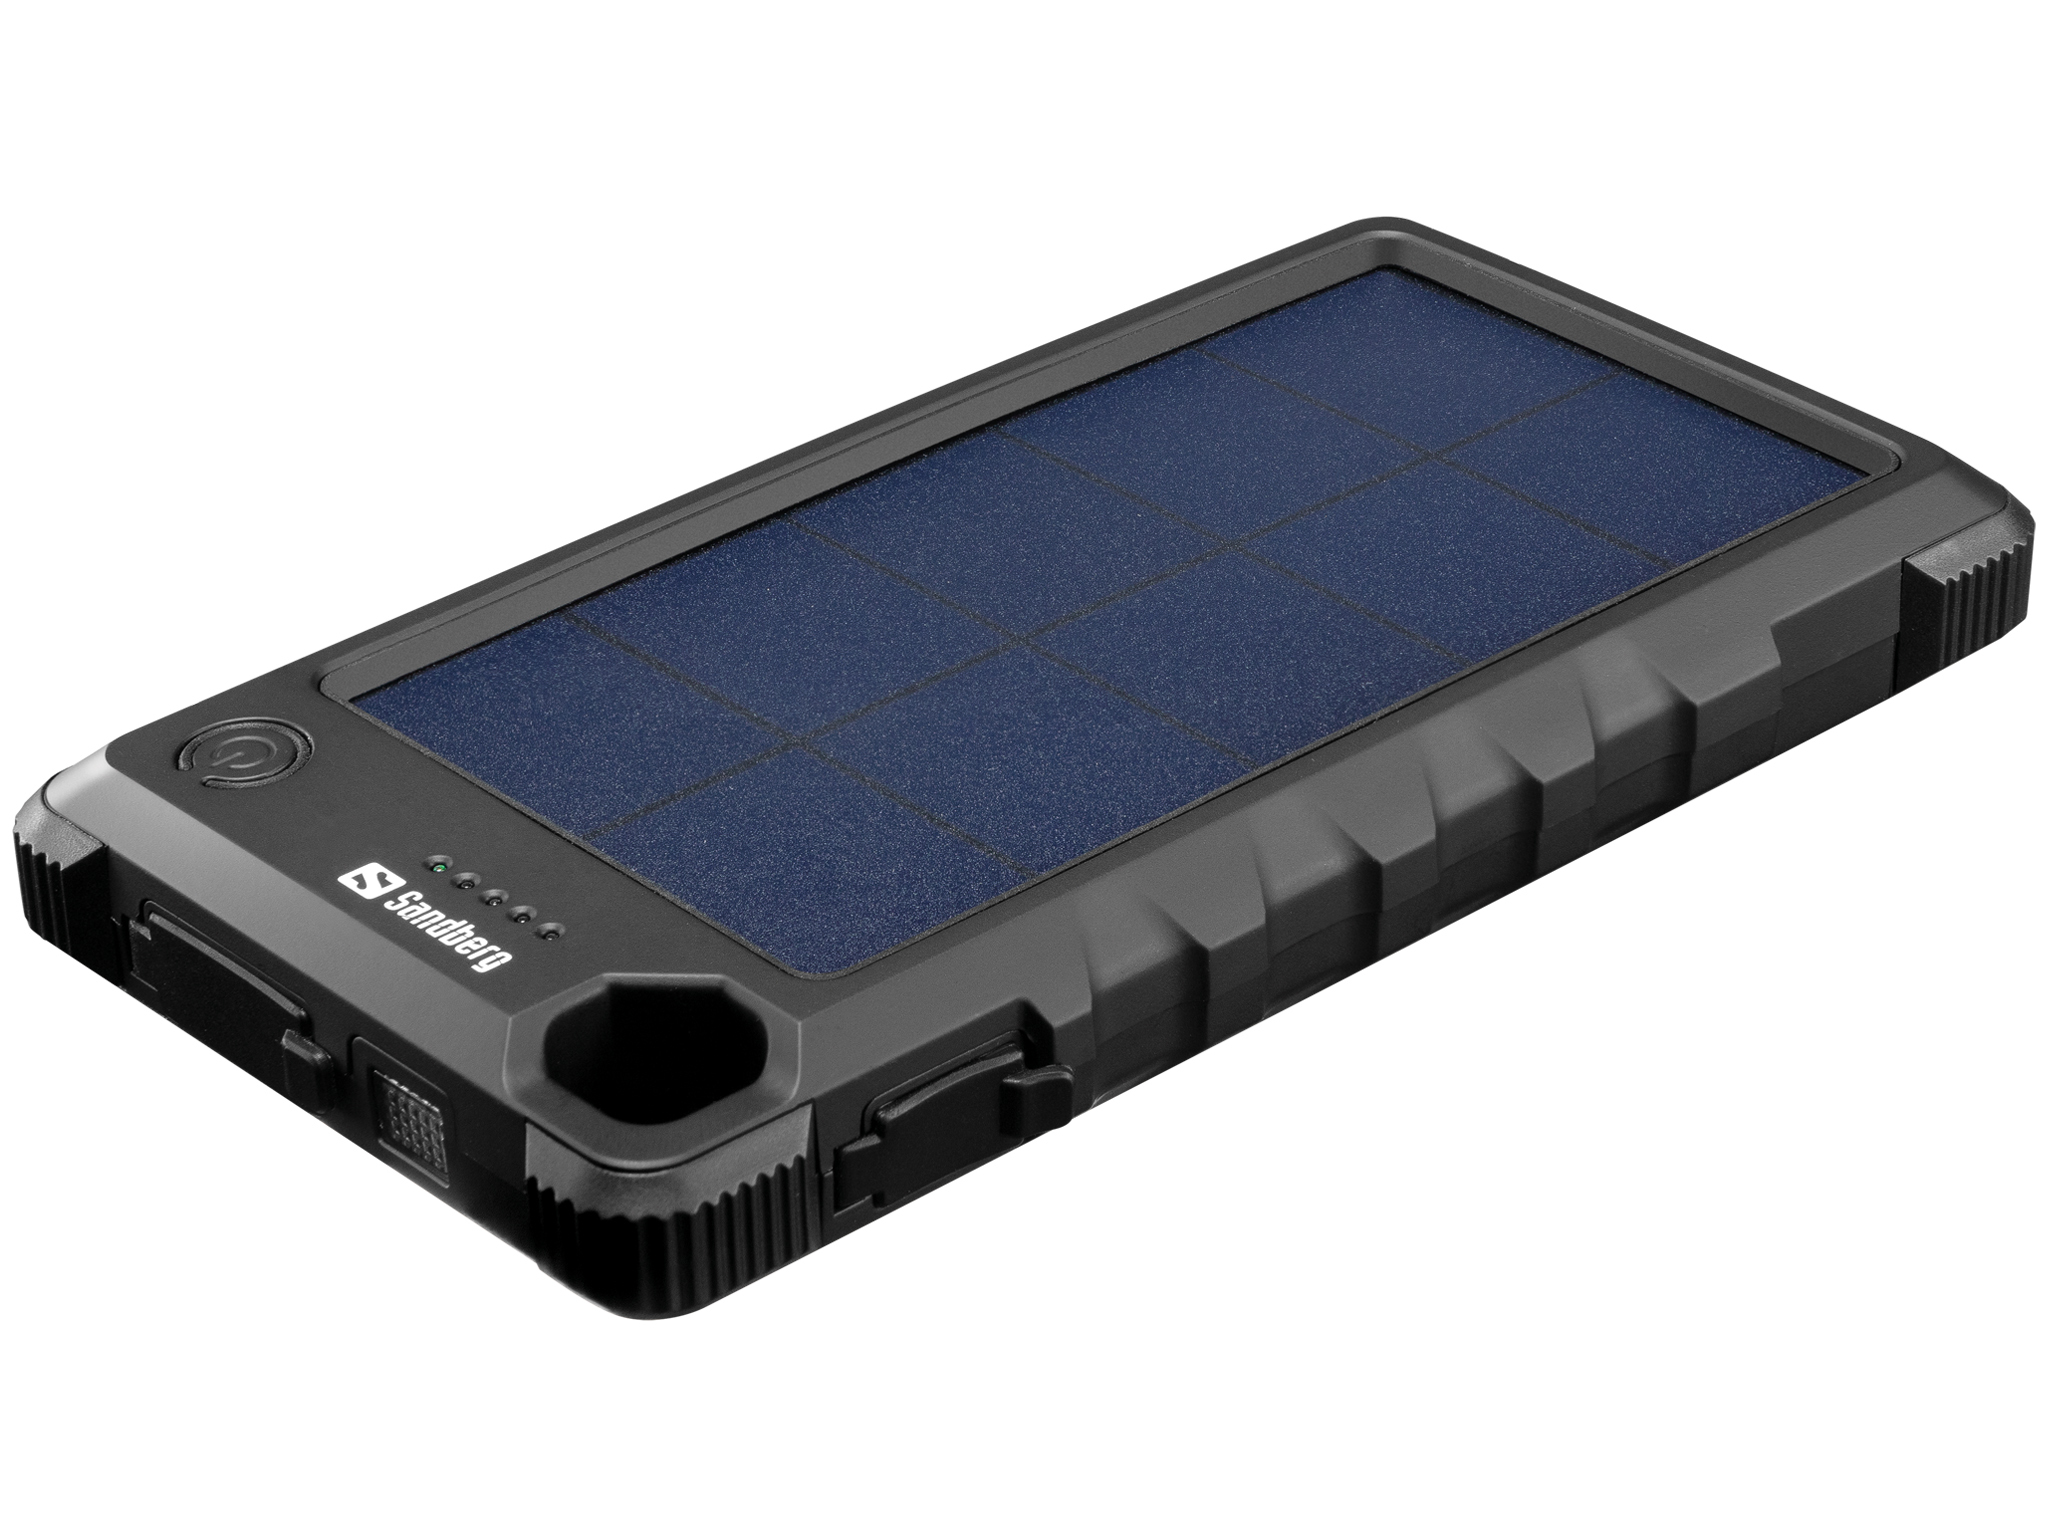 SANDBERG Outdoor Solar Powerbank 10000 - Solar-Powerbank - 10000 mAh - 37 Wh - 3 A (USB, 24 pin USB-C)